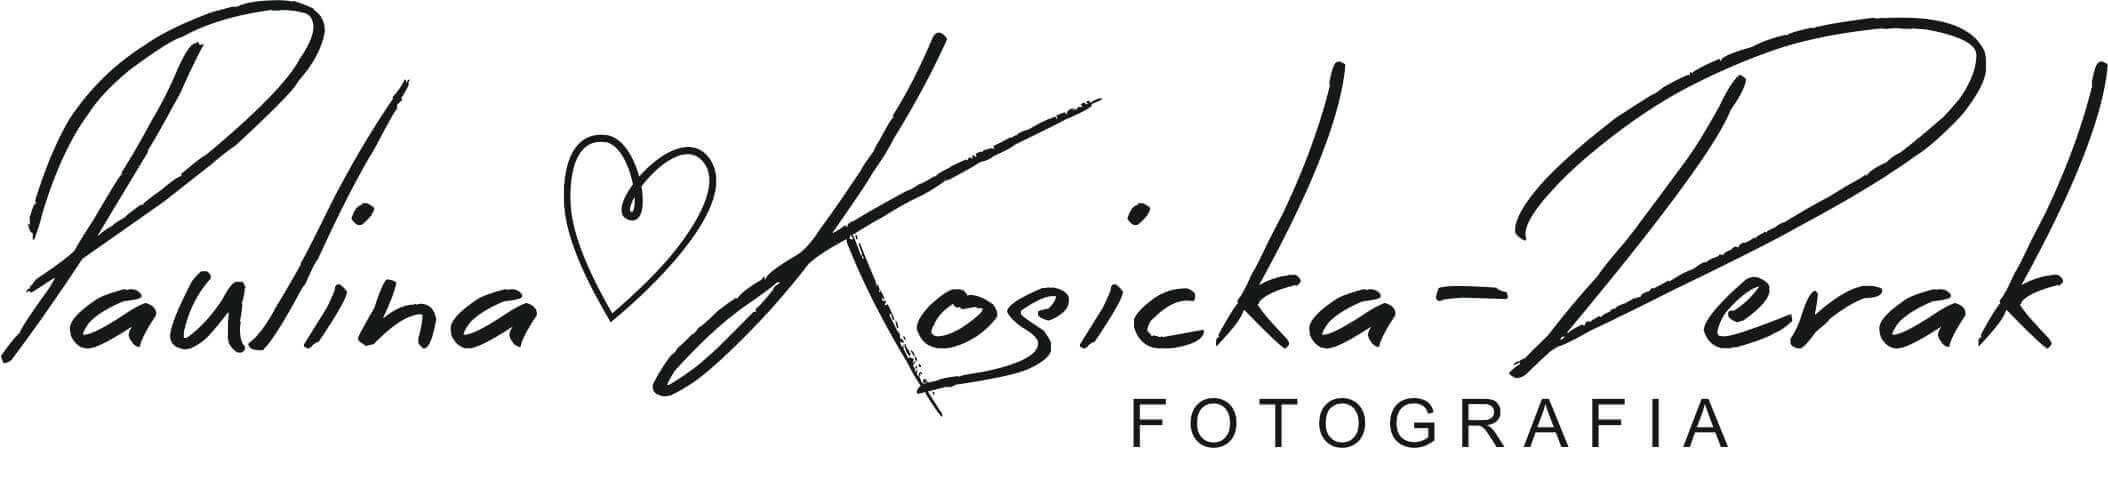 Paulina Kosicka-Derak Fotografia logo